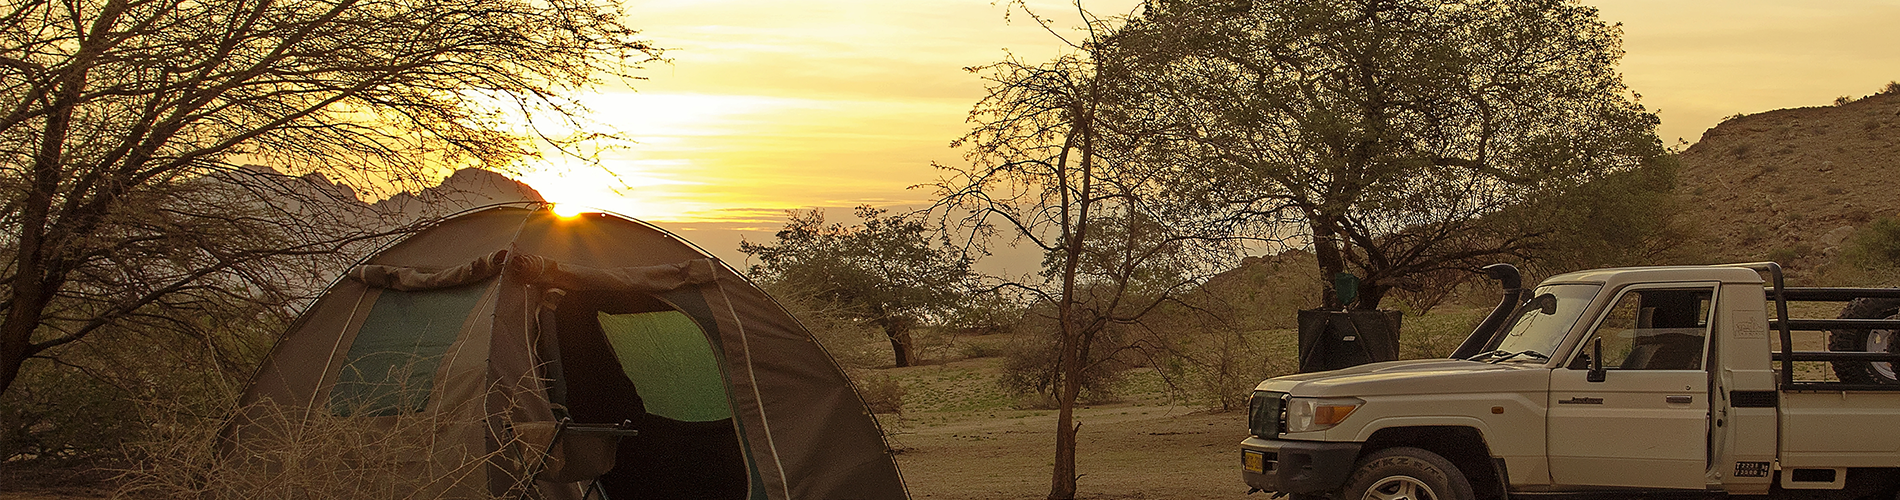 camping sauvage expedition namibie circuit trek